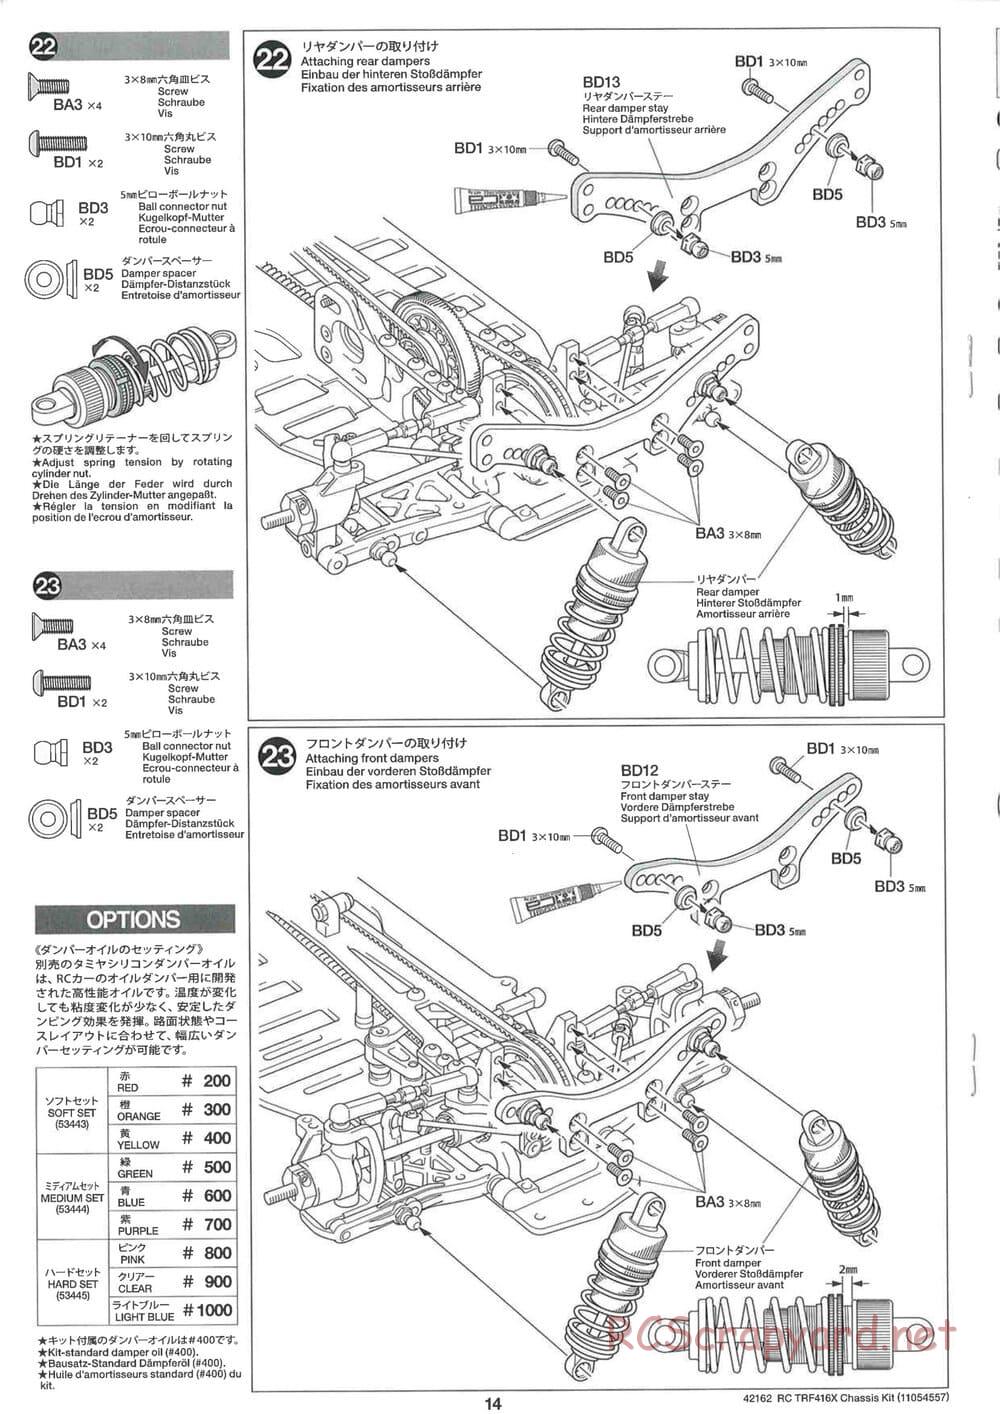 Tamiya - TRF416X Chassis - Manual - Page 14